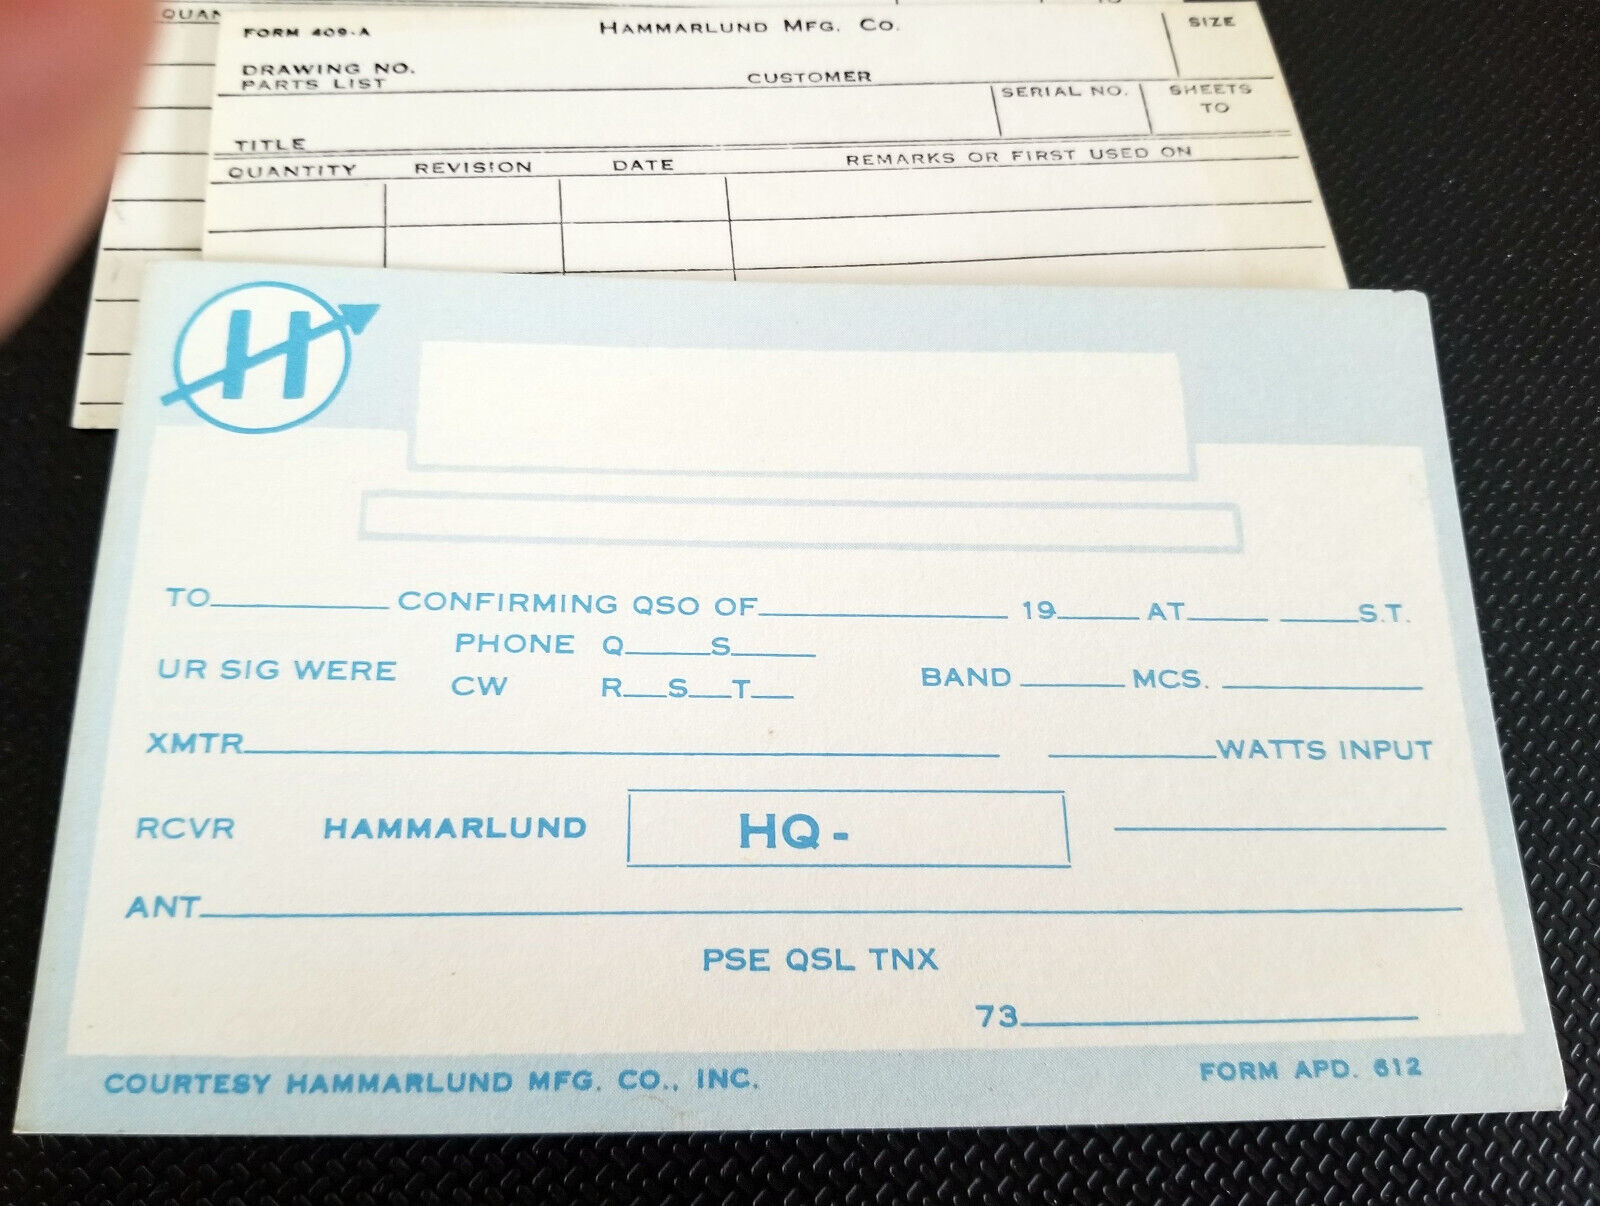 Courtesy of HAMMARLUND - BLANK AMATEUR RADIO QSL CARD from estate of H ENGINEER Без бренда